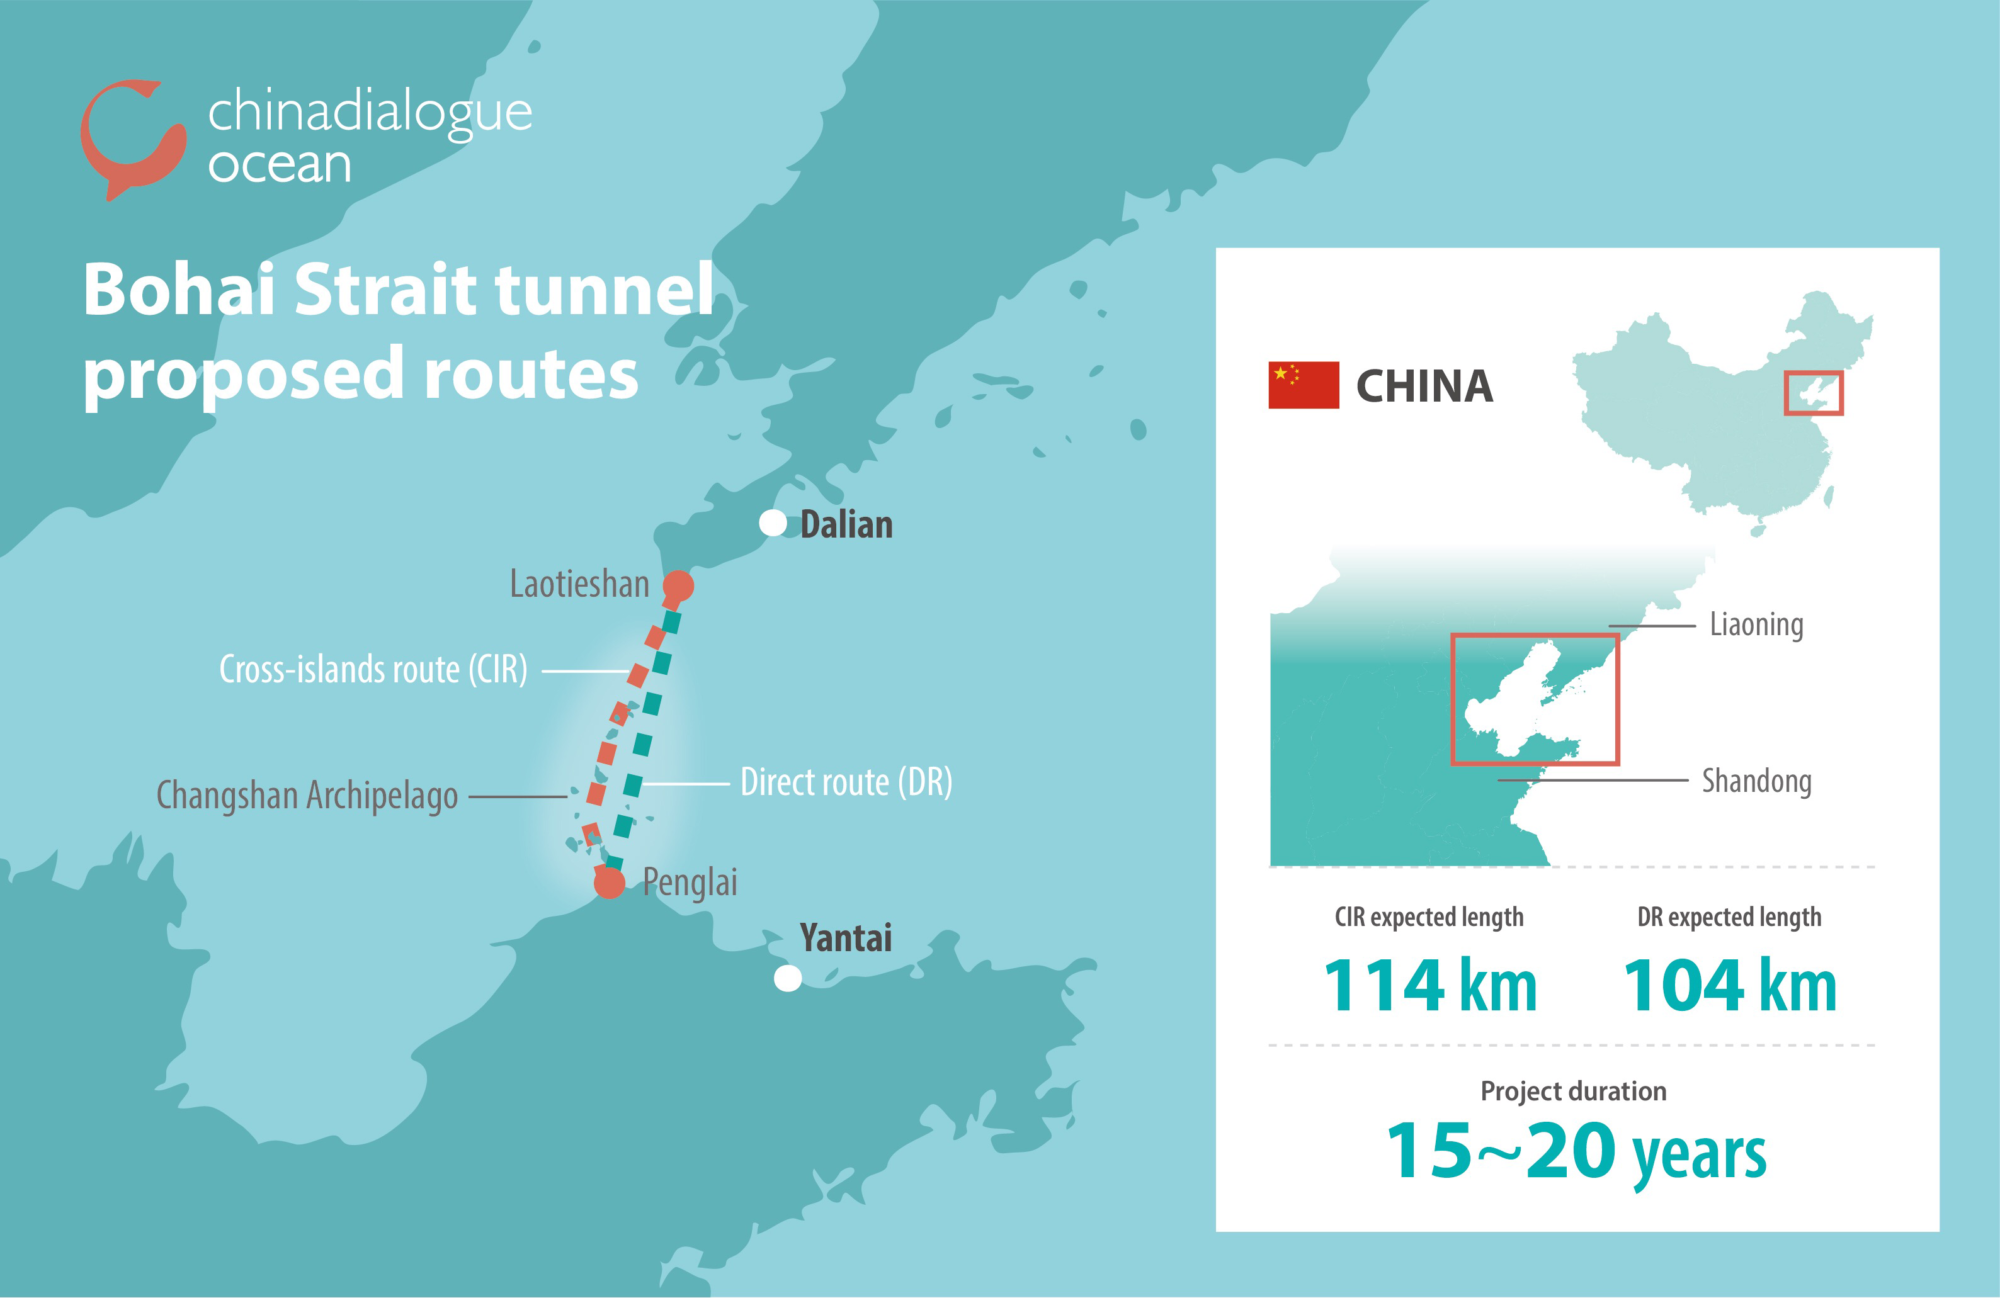 Bohai Strait tunnel, world's longest undersea tunnel